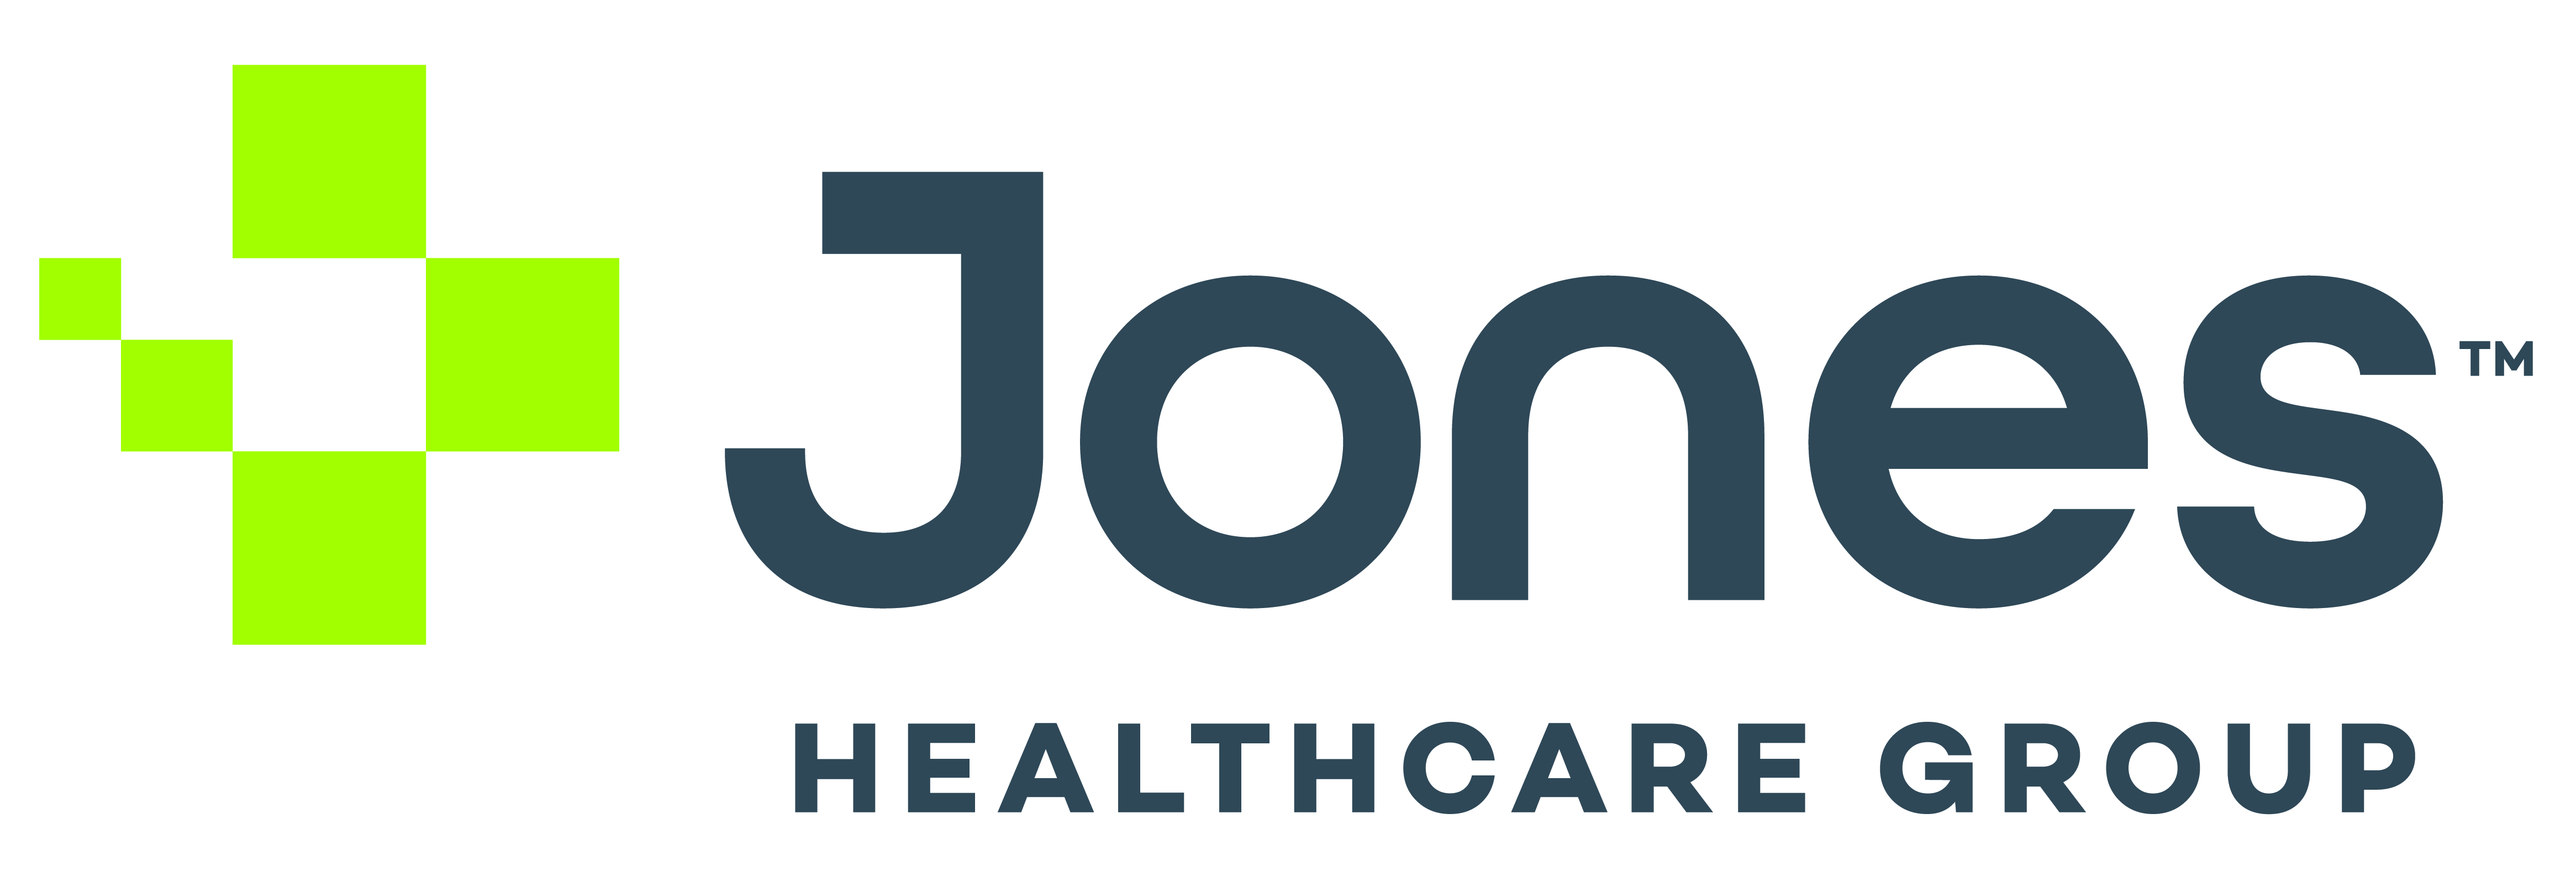 Jones Packaging rebrands as Jones Healthcare Group - PrintAction